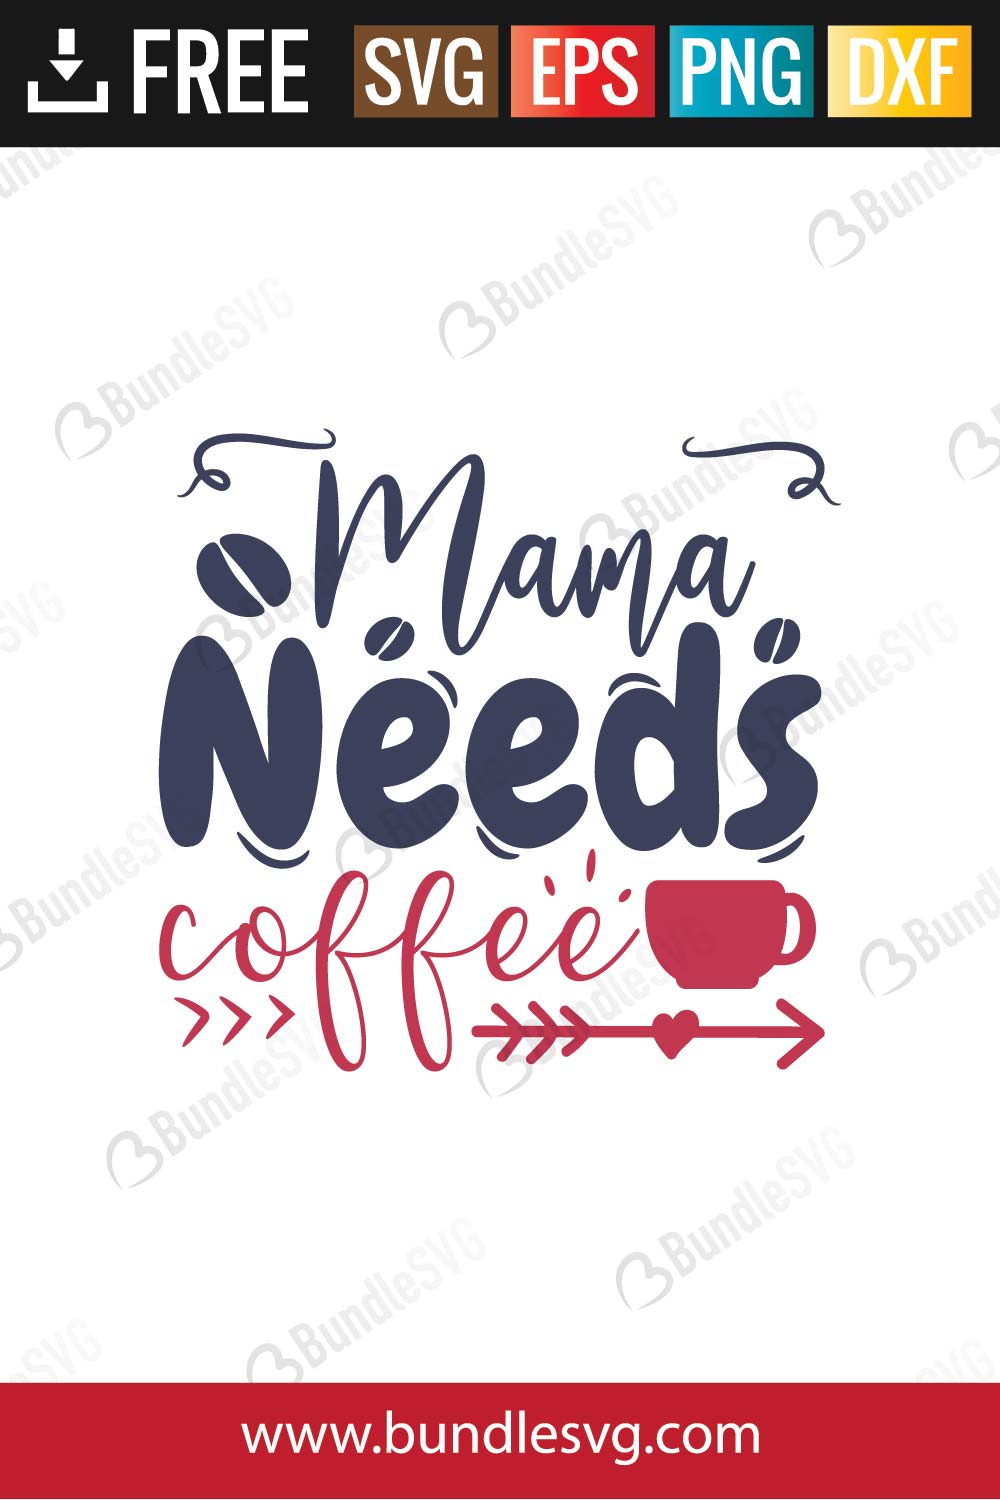 Download Mama Needs Coffee Svg Cut Files Bundlesvg